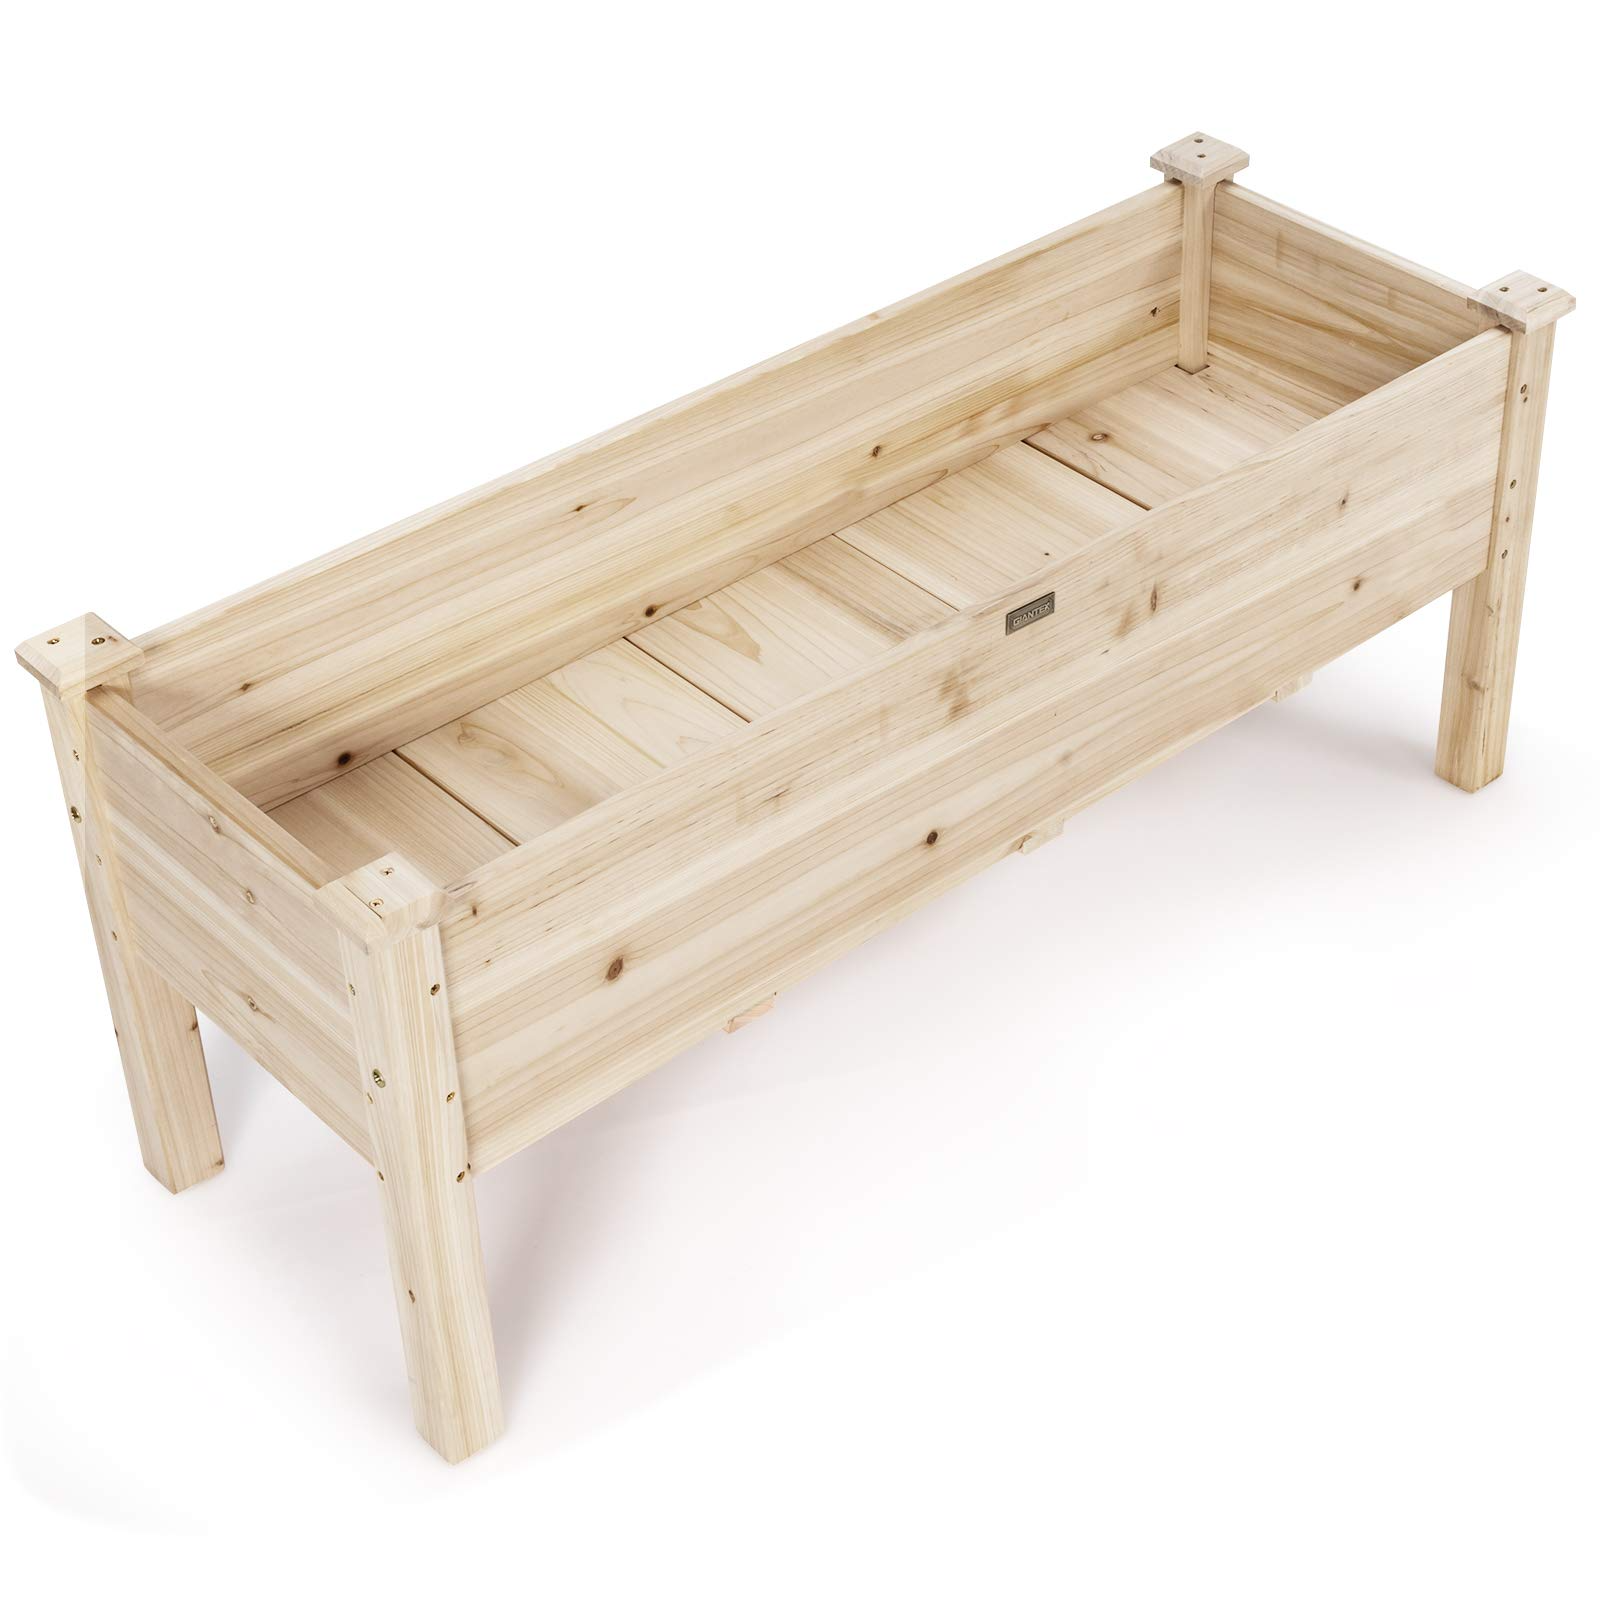 Wood Planter Box with Legs, 47.5"L x 17"W x 20"H